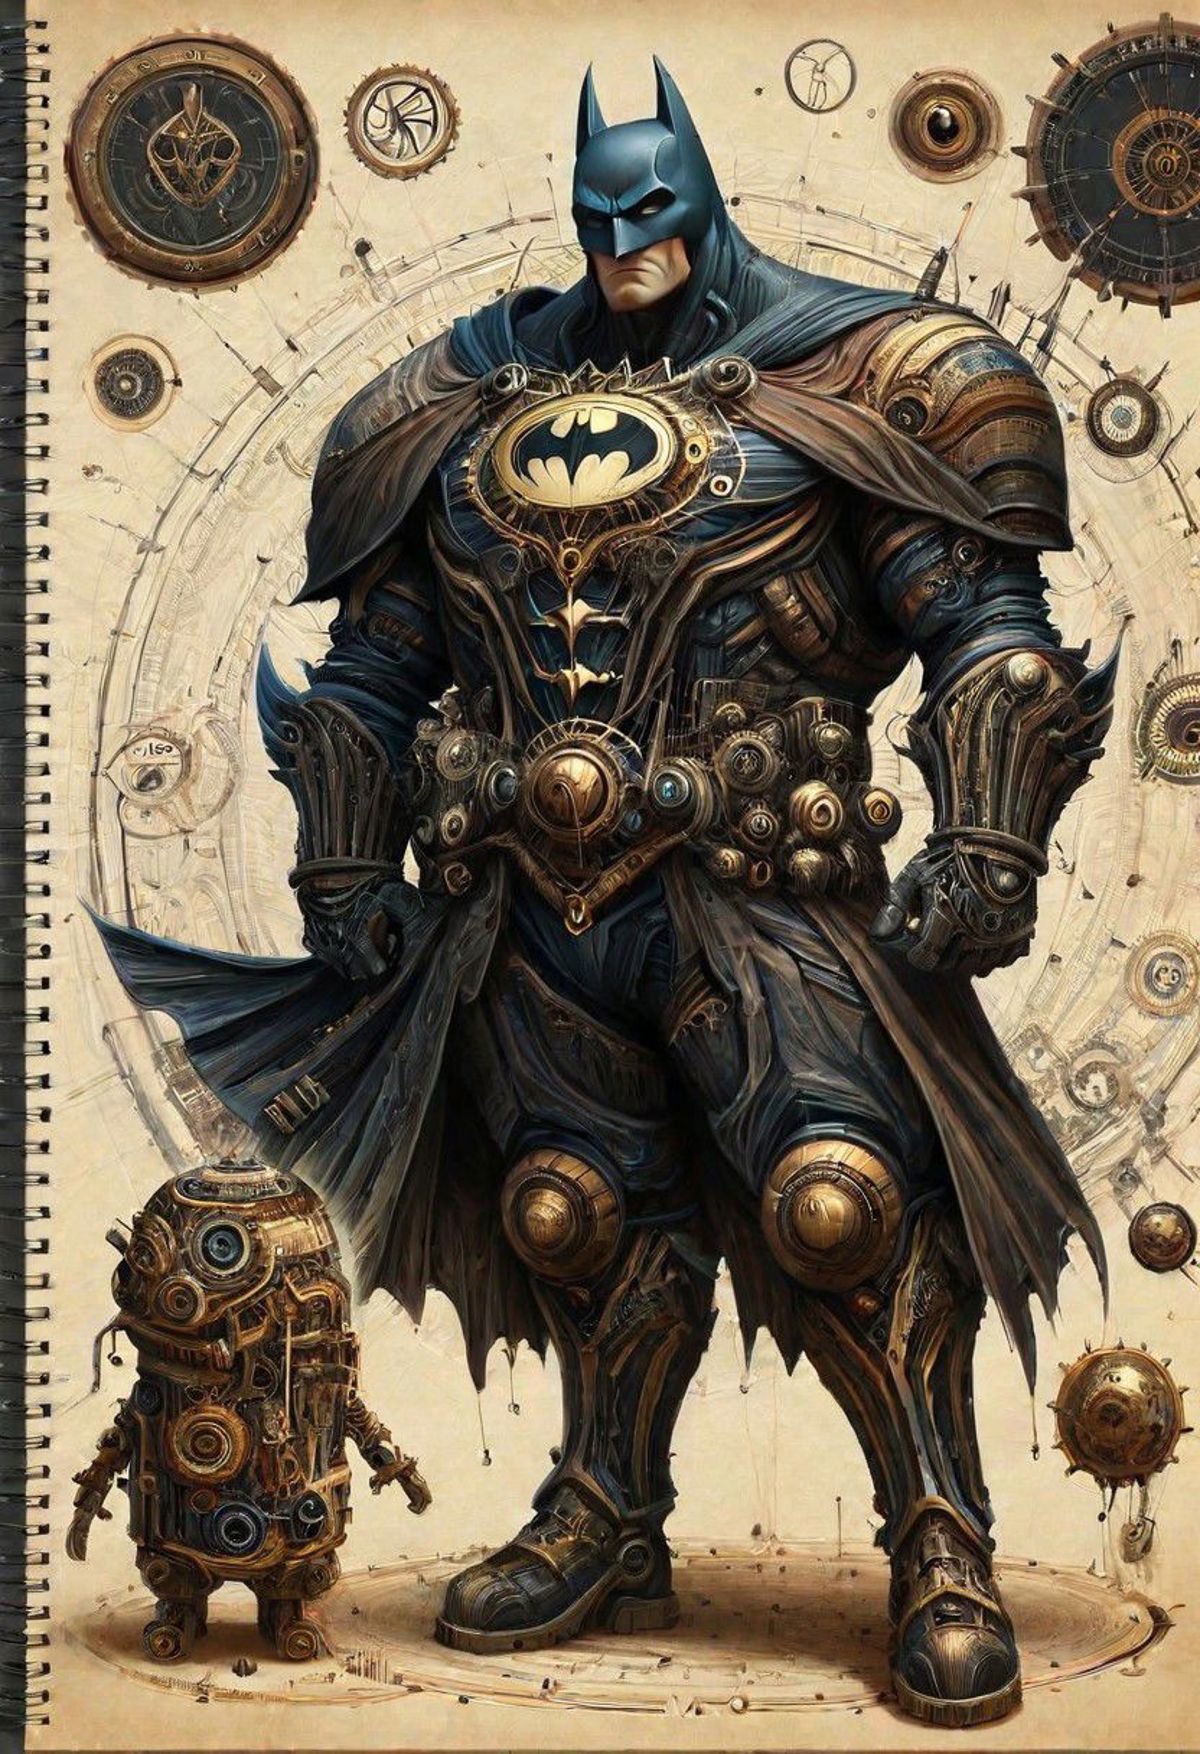 Batman Superhero Artwork with Steampunk Elements